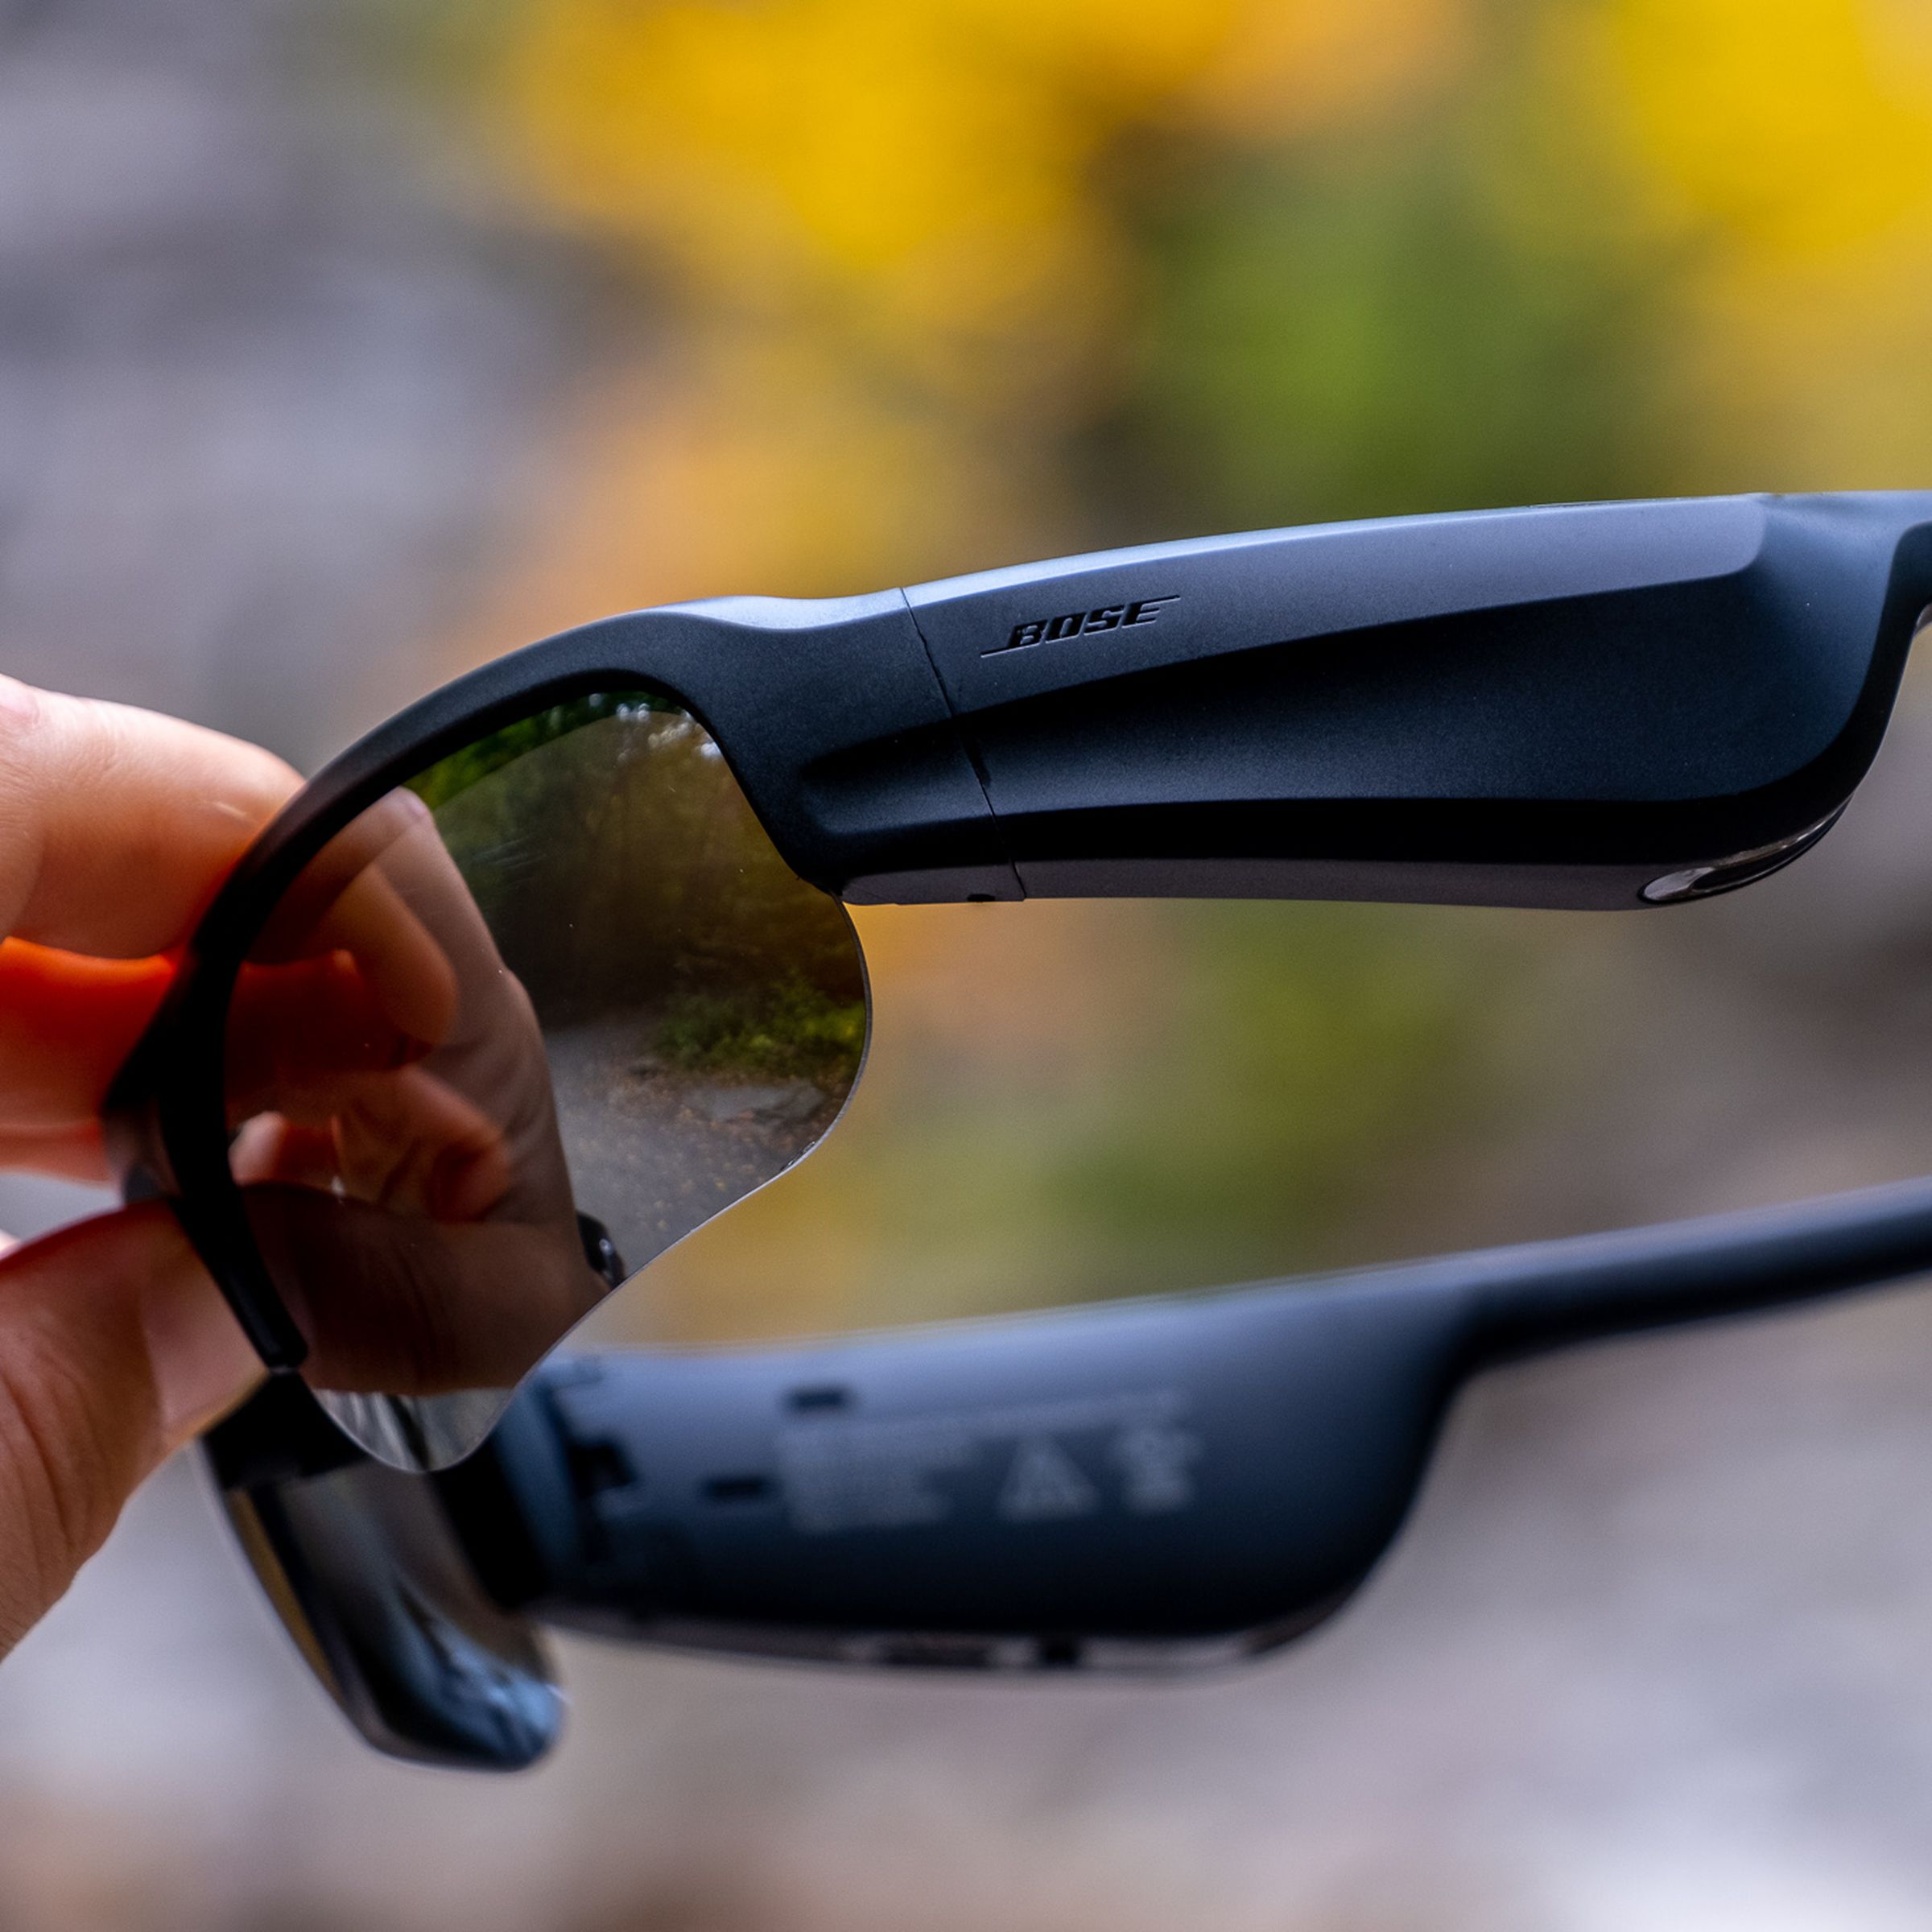 A close-up image of Bose’s Frames Tempo audio sunglasses.